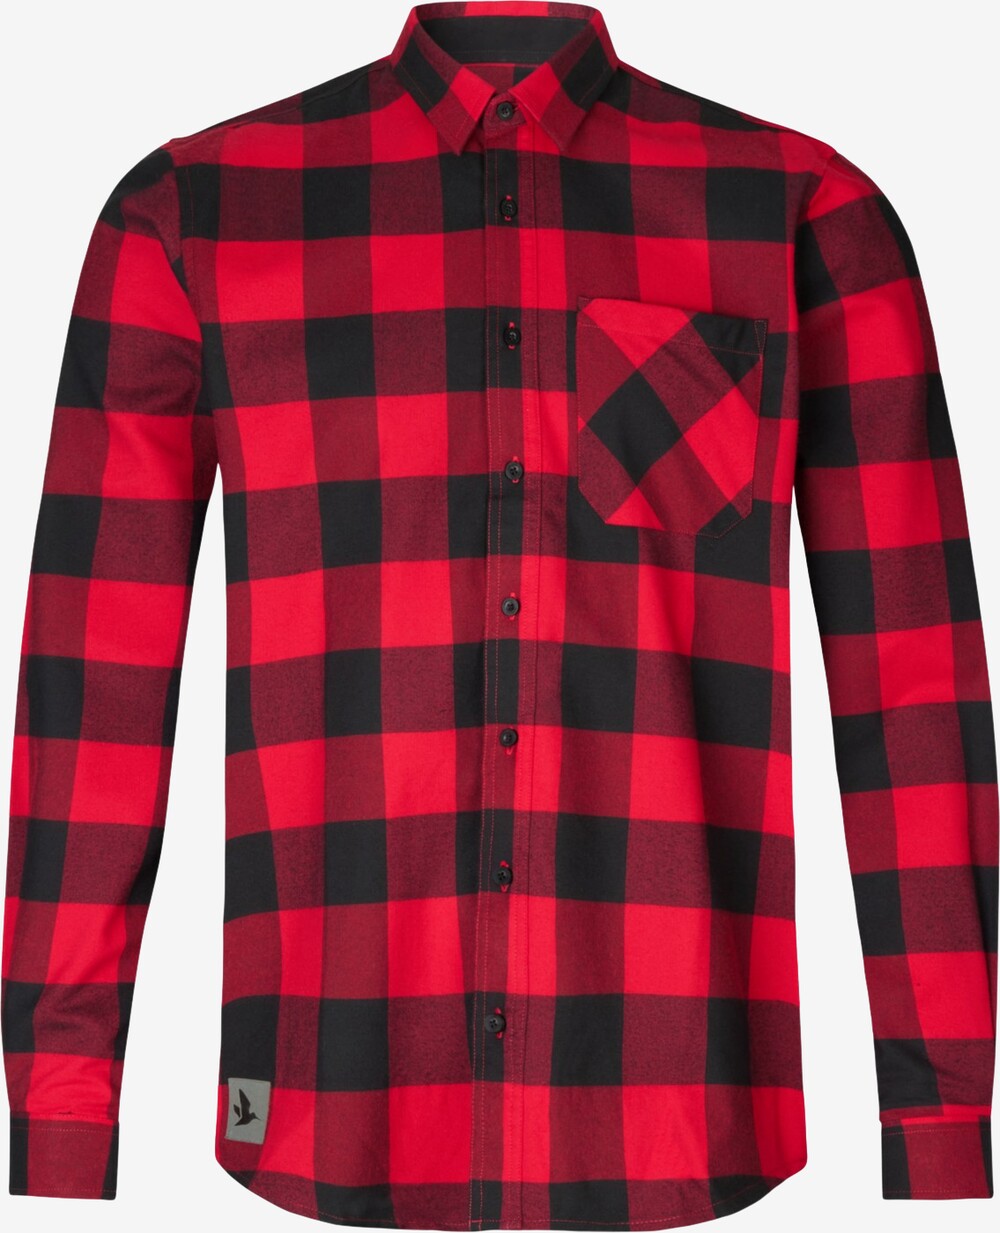 Seeland Toronto skjorte red check